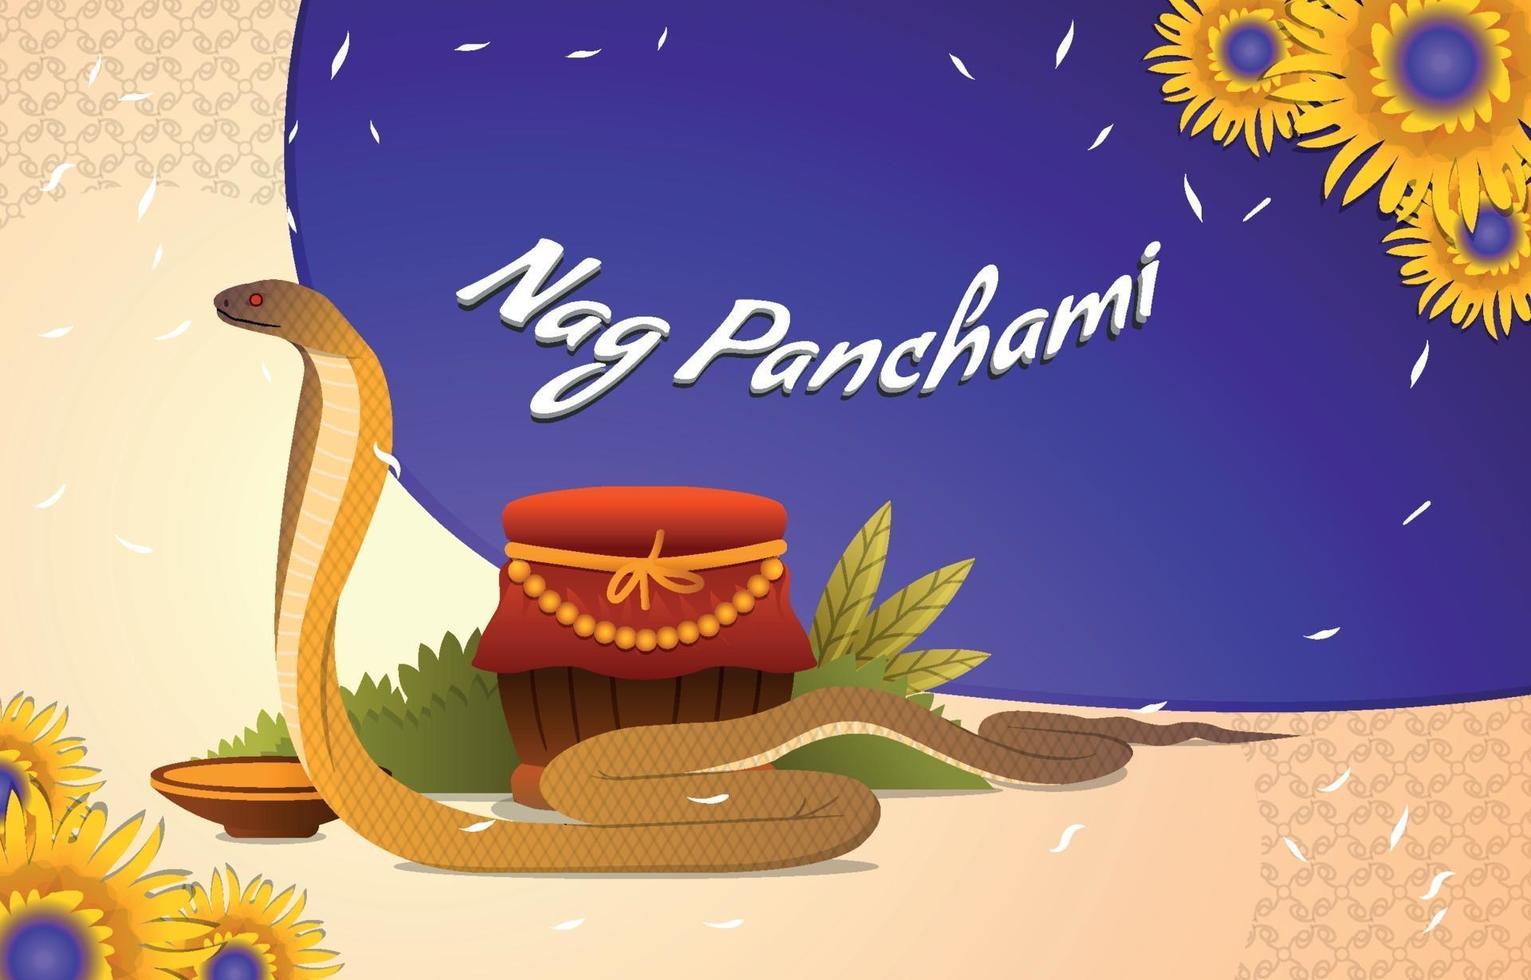 Nag Panchami Background vector